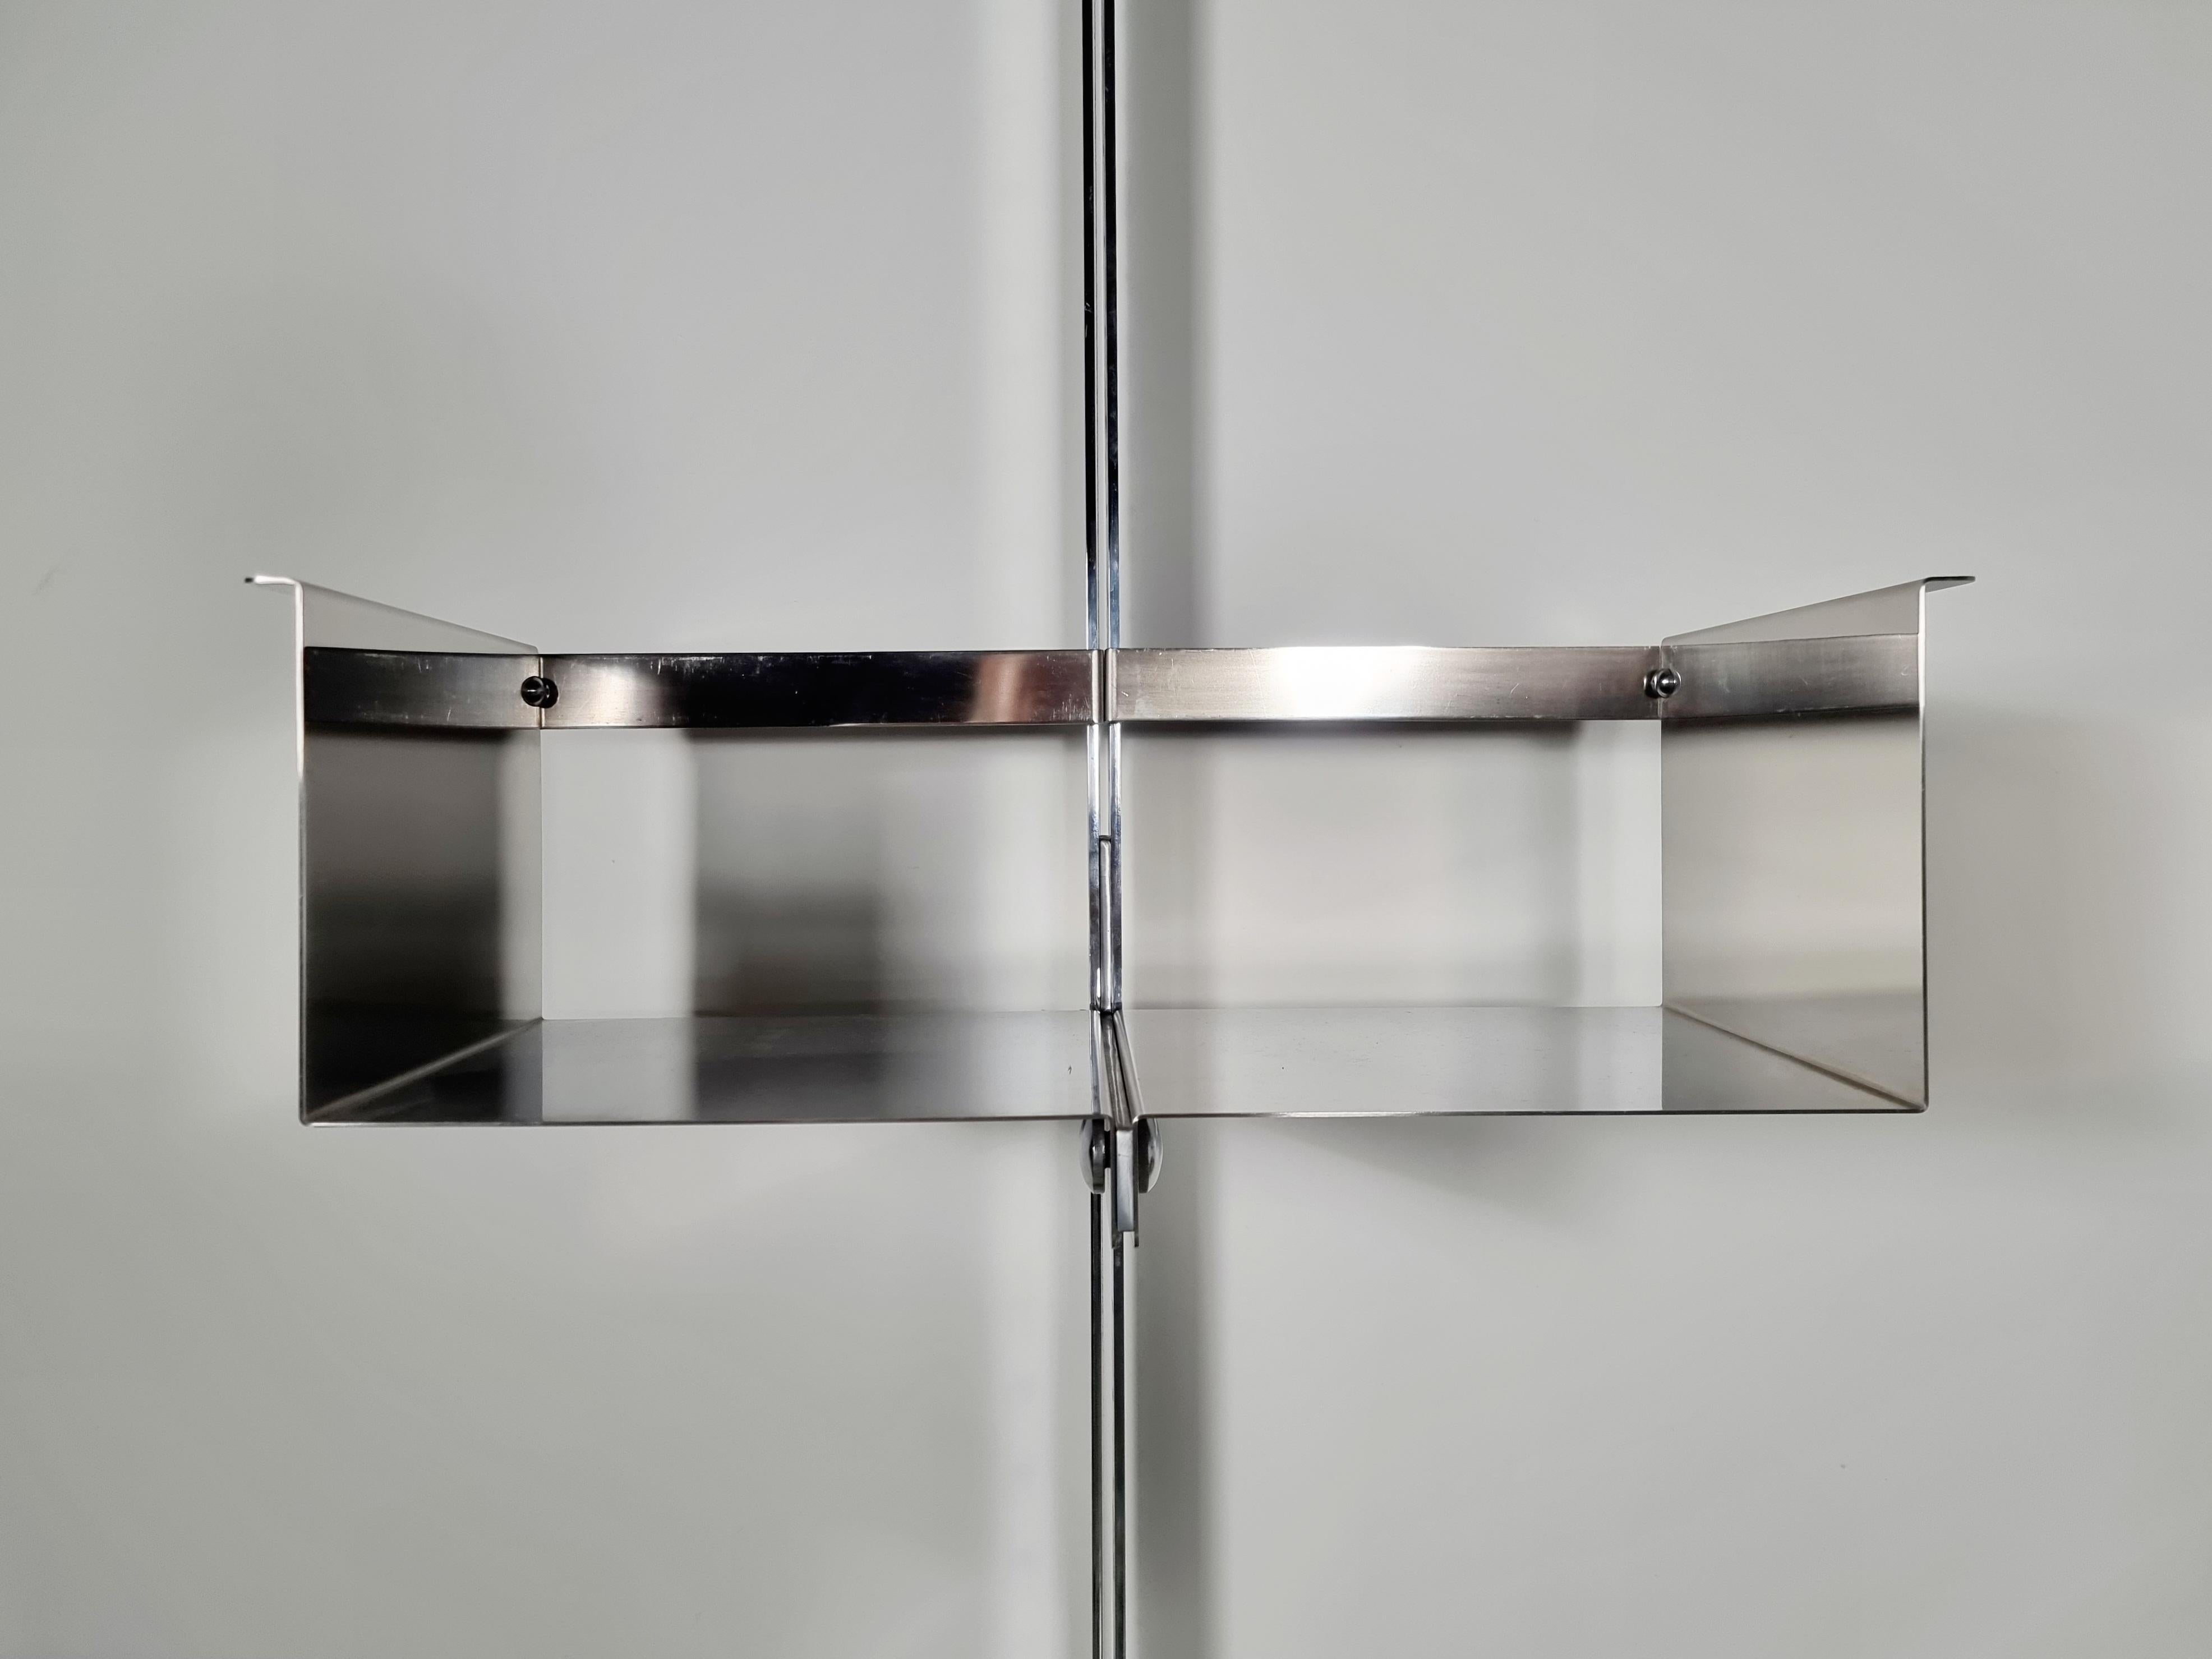  P700 Proposal Wall-Unit in chrome and glass, Vittorio Introini, Saporiti For Sale 7